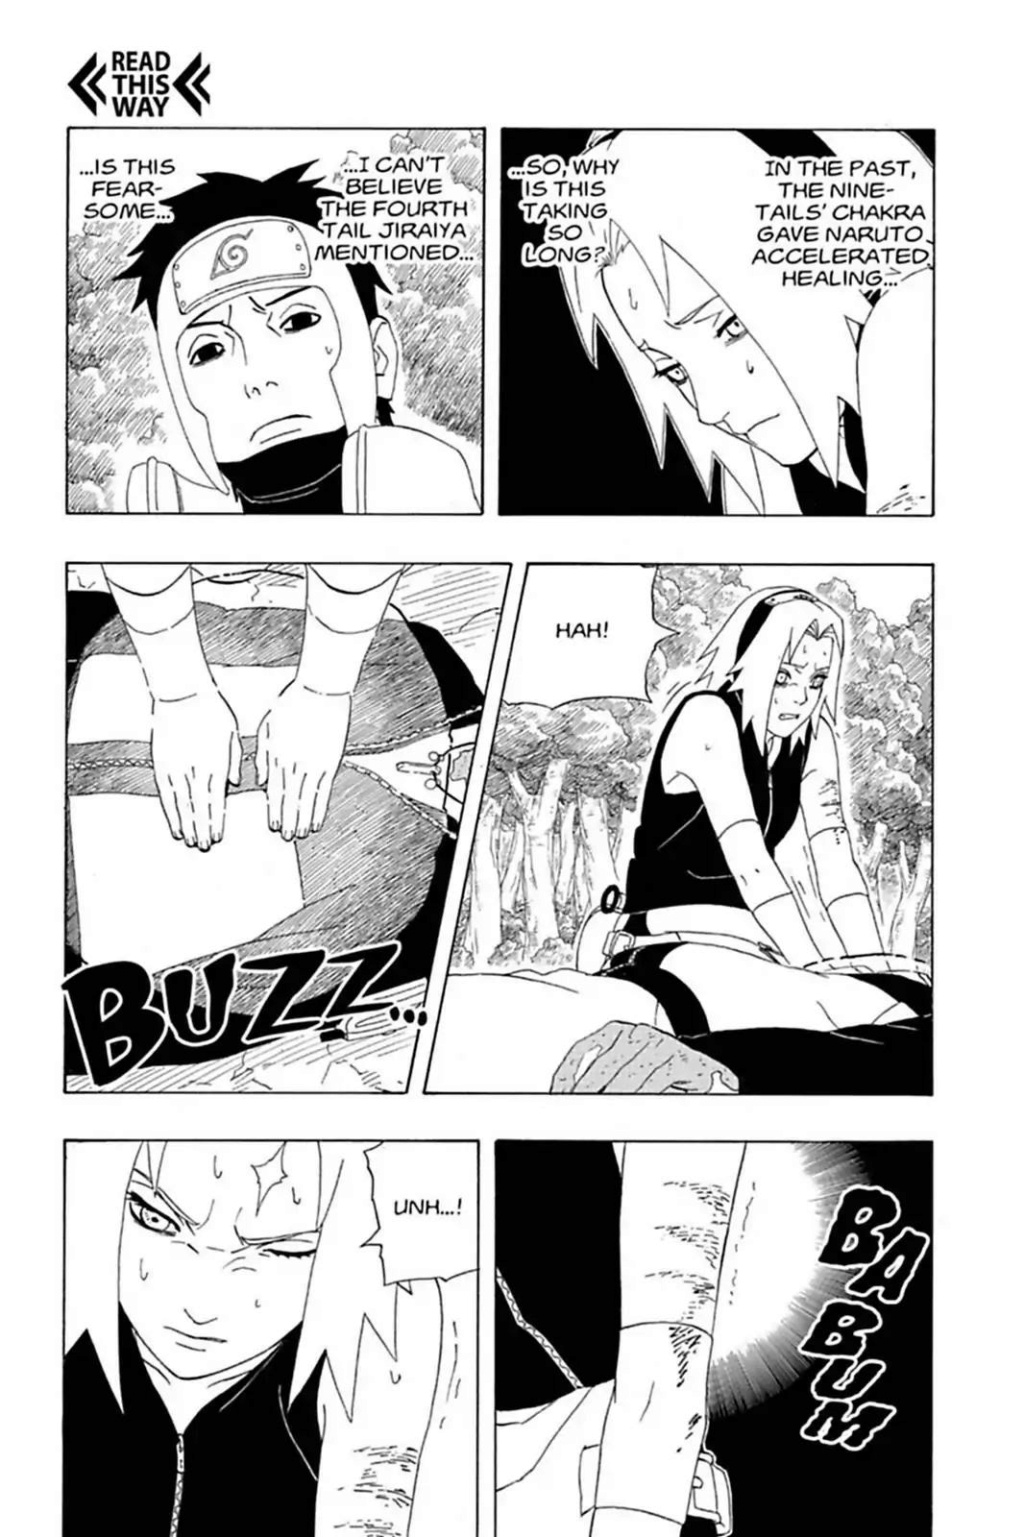 Sakura Novel vs Naruto 4 Caldas - Página 4 07_20210